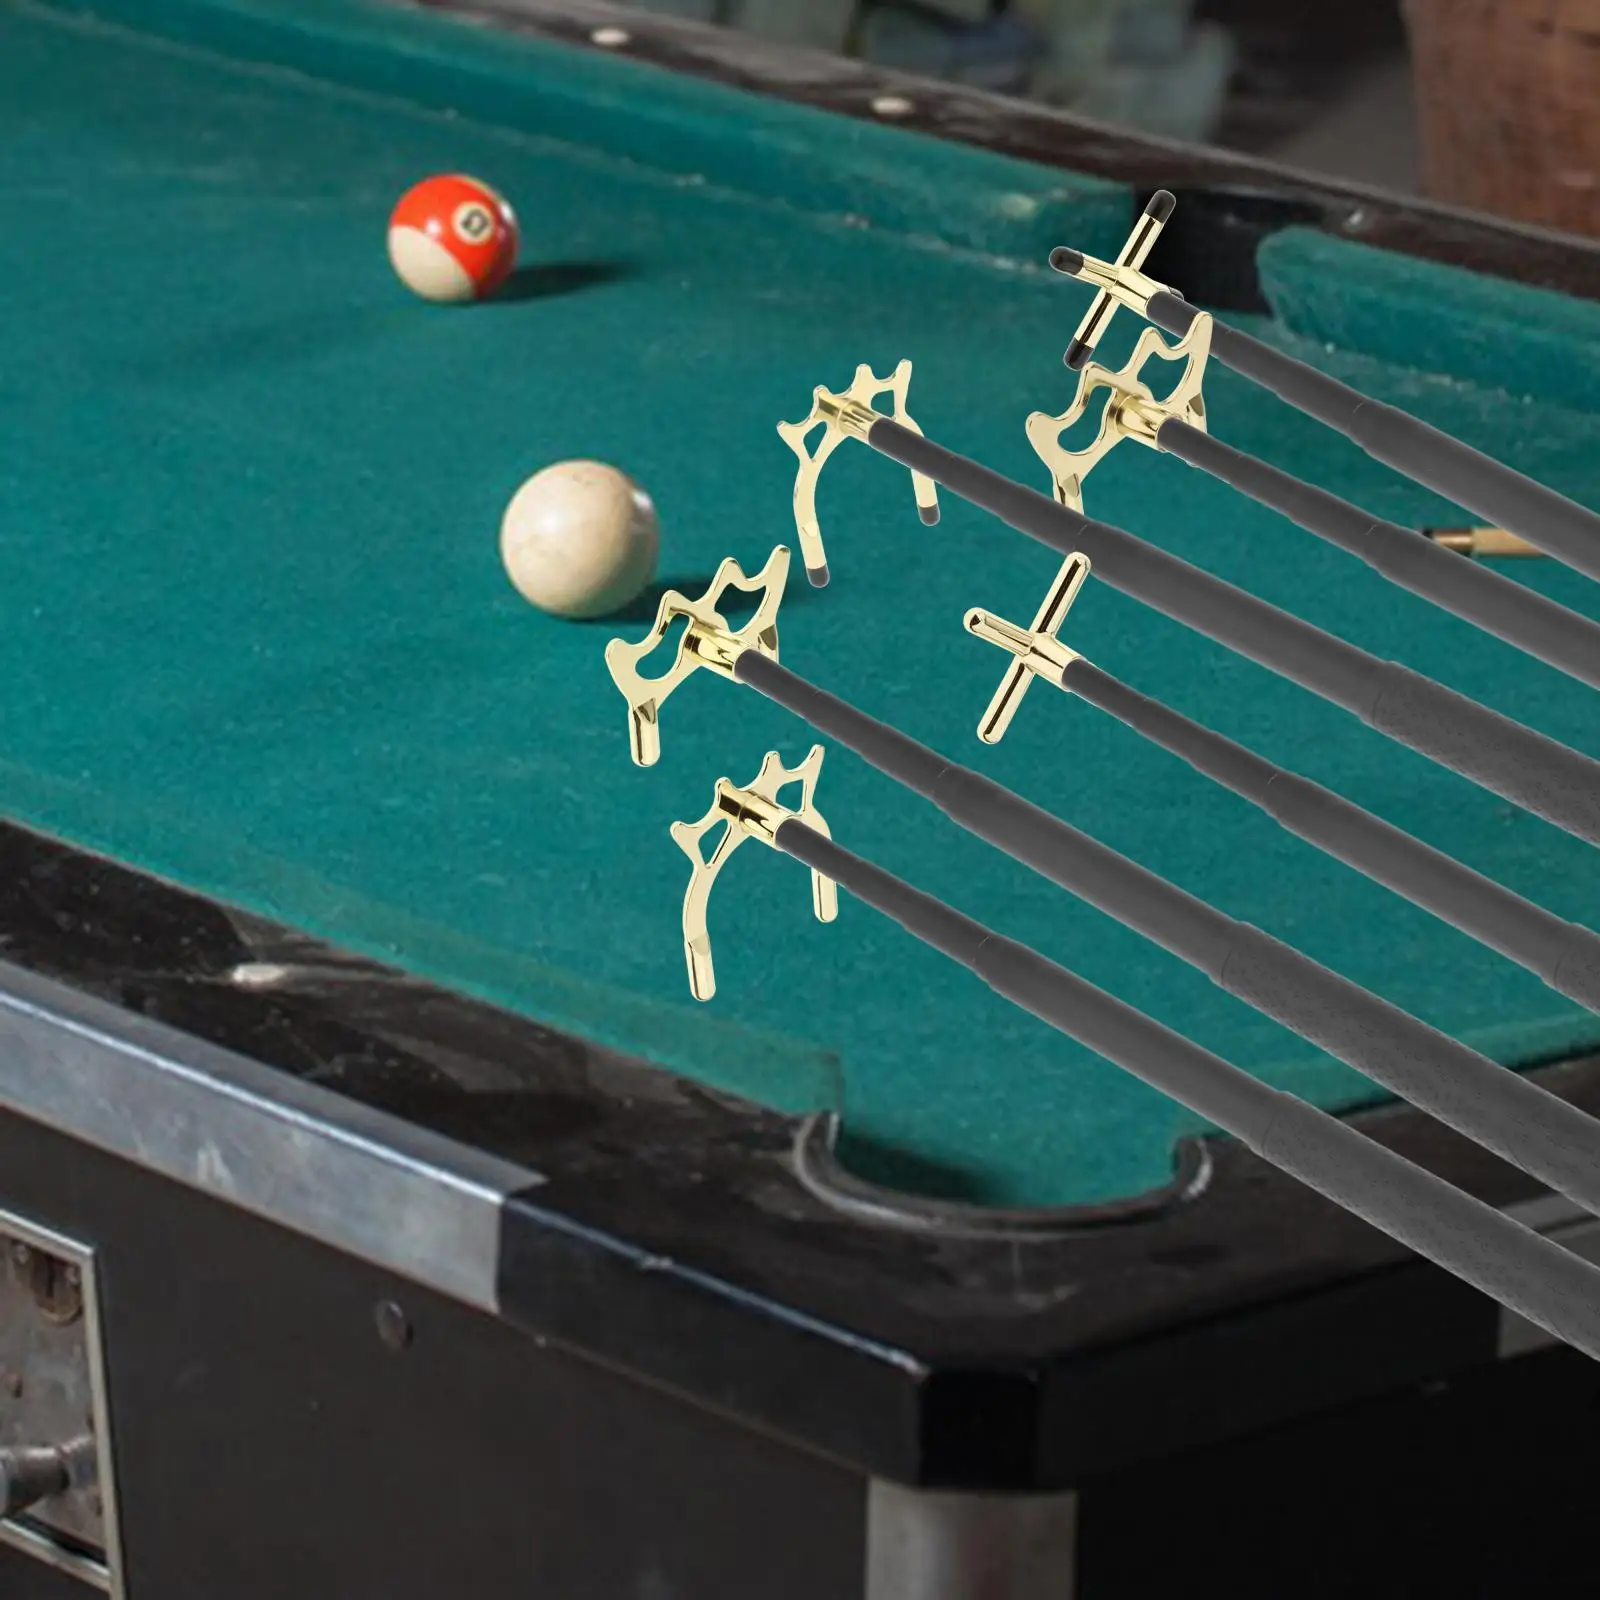 Retractable Pool Bridge Sticks, Billiards Cue Sticks with Removable Bridge Head, Anti Slip Handle Billiard Pool Cue Accessory